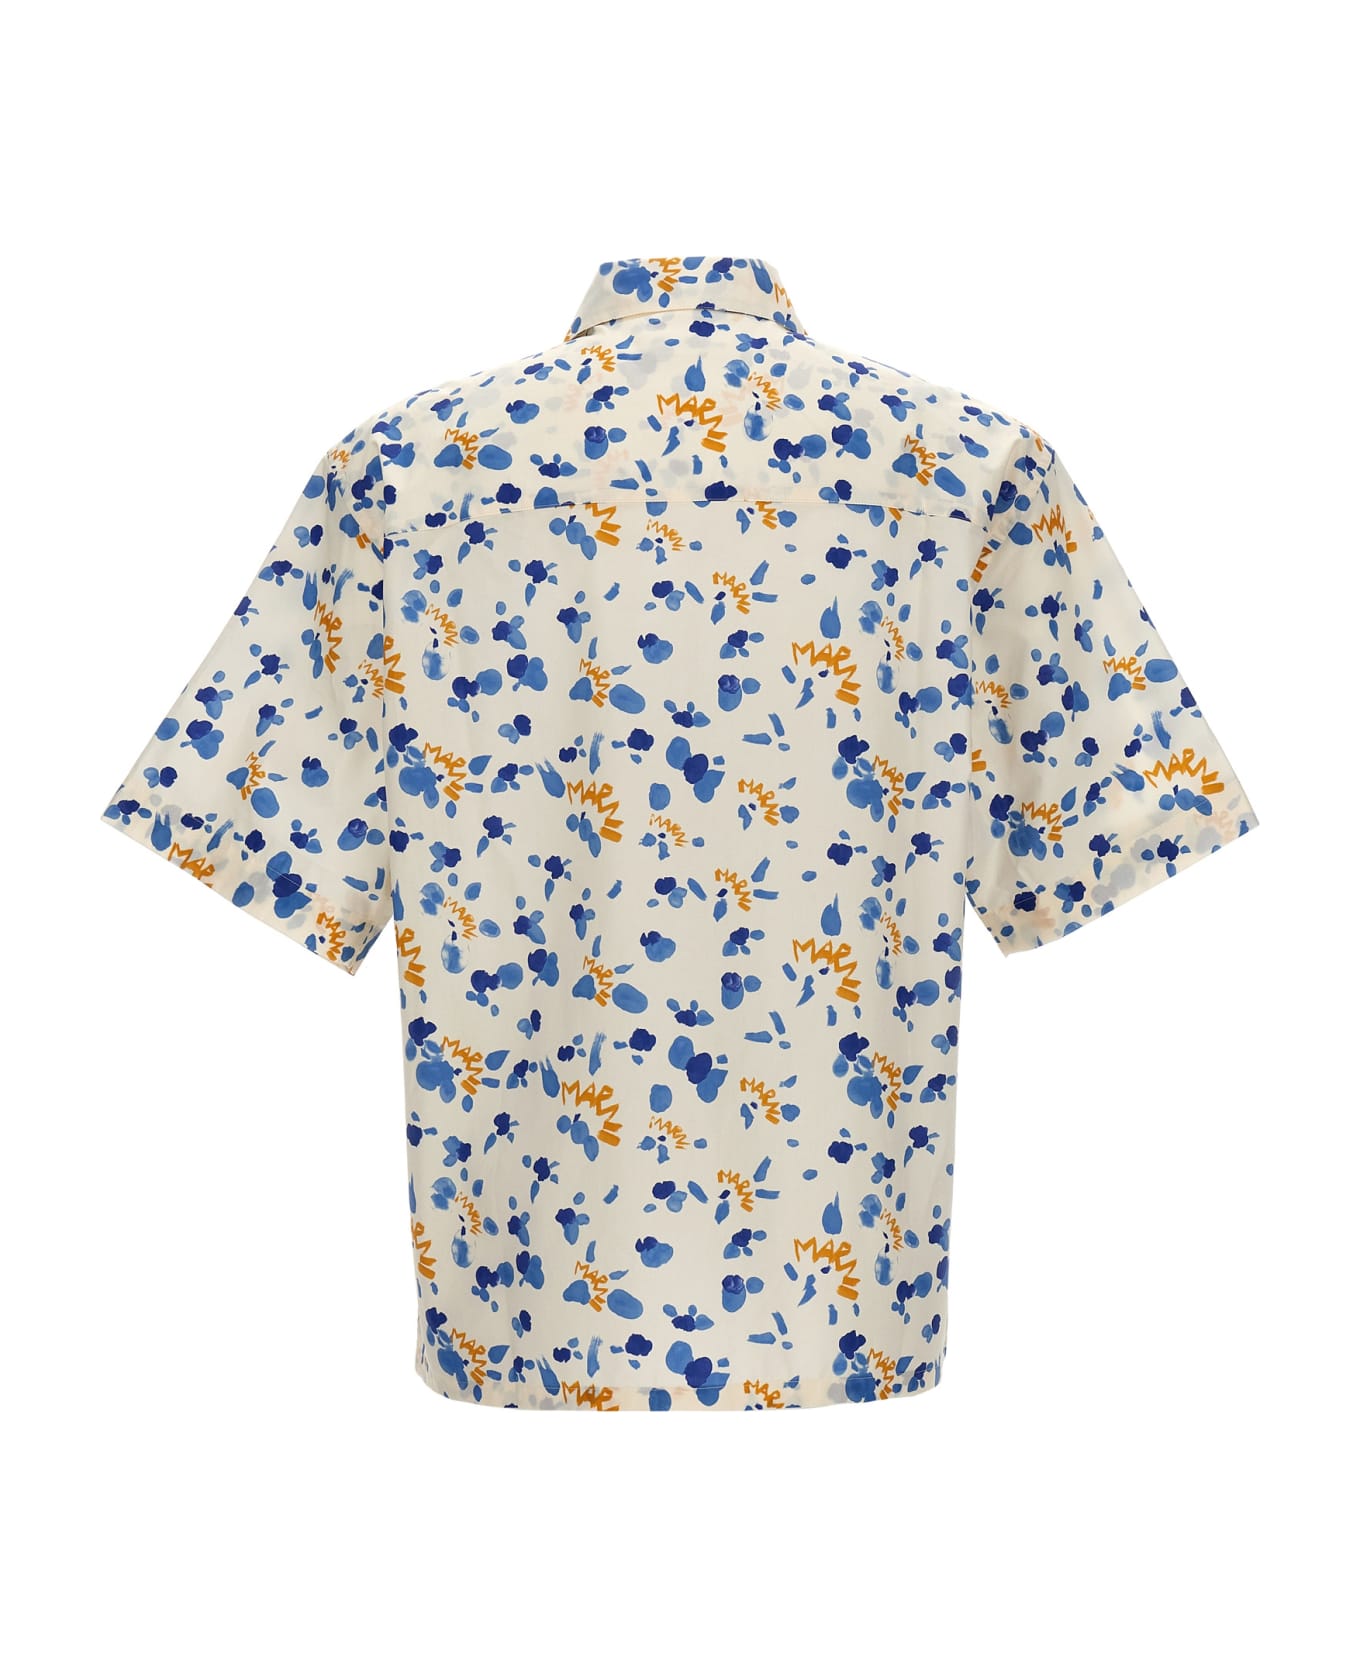 Marni 'marni Dripping' Shirt - Multicolor シャツ